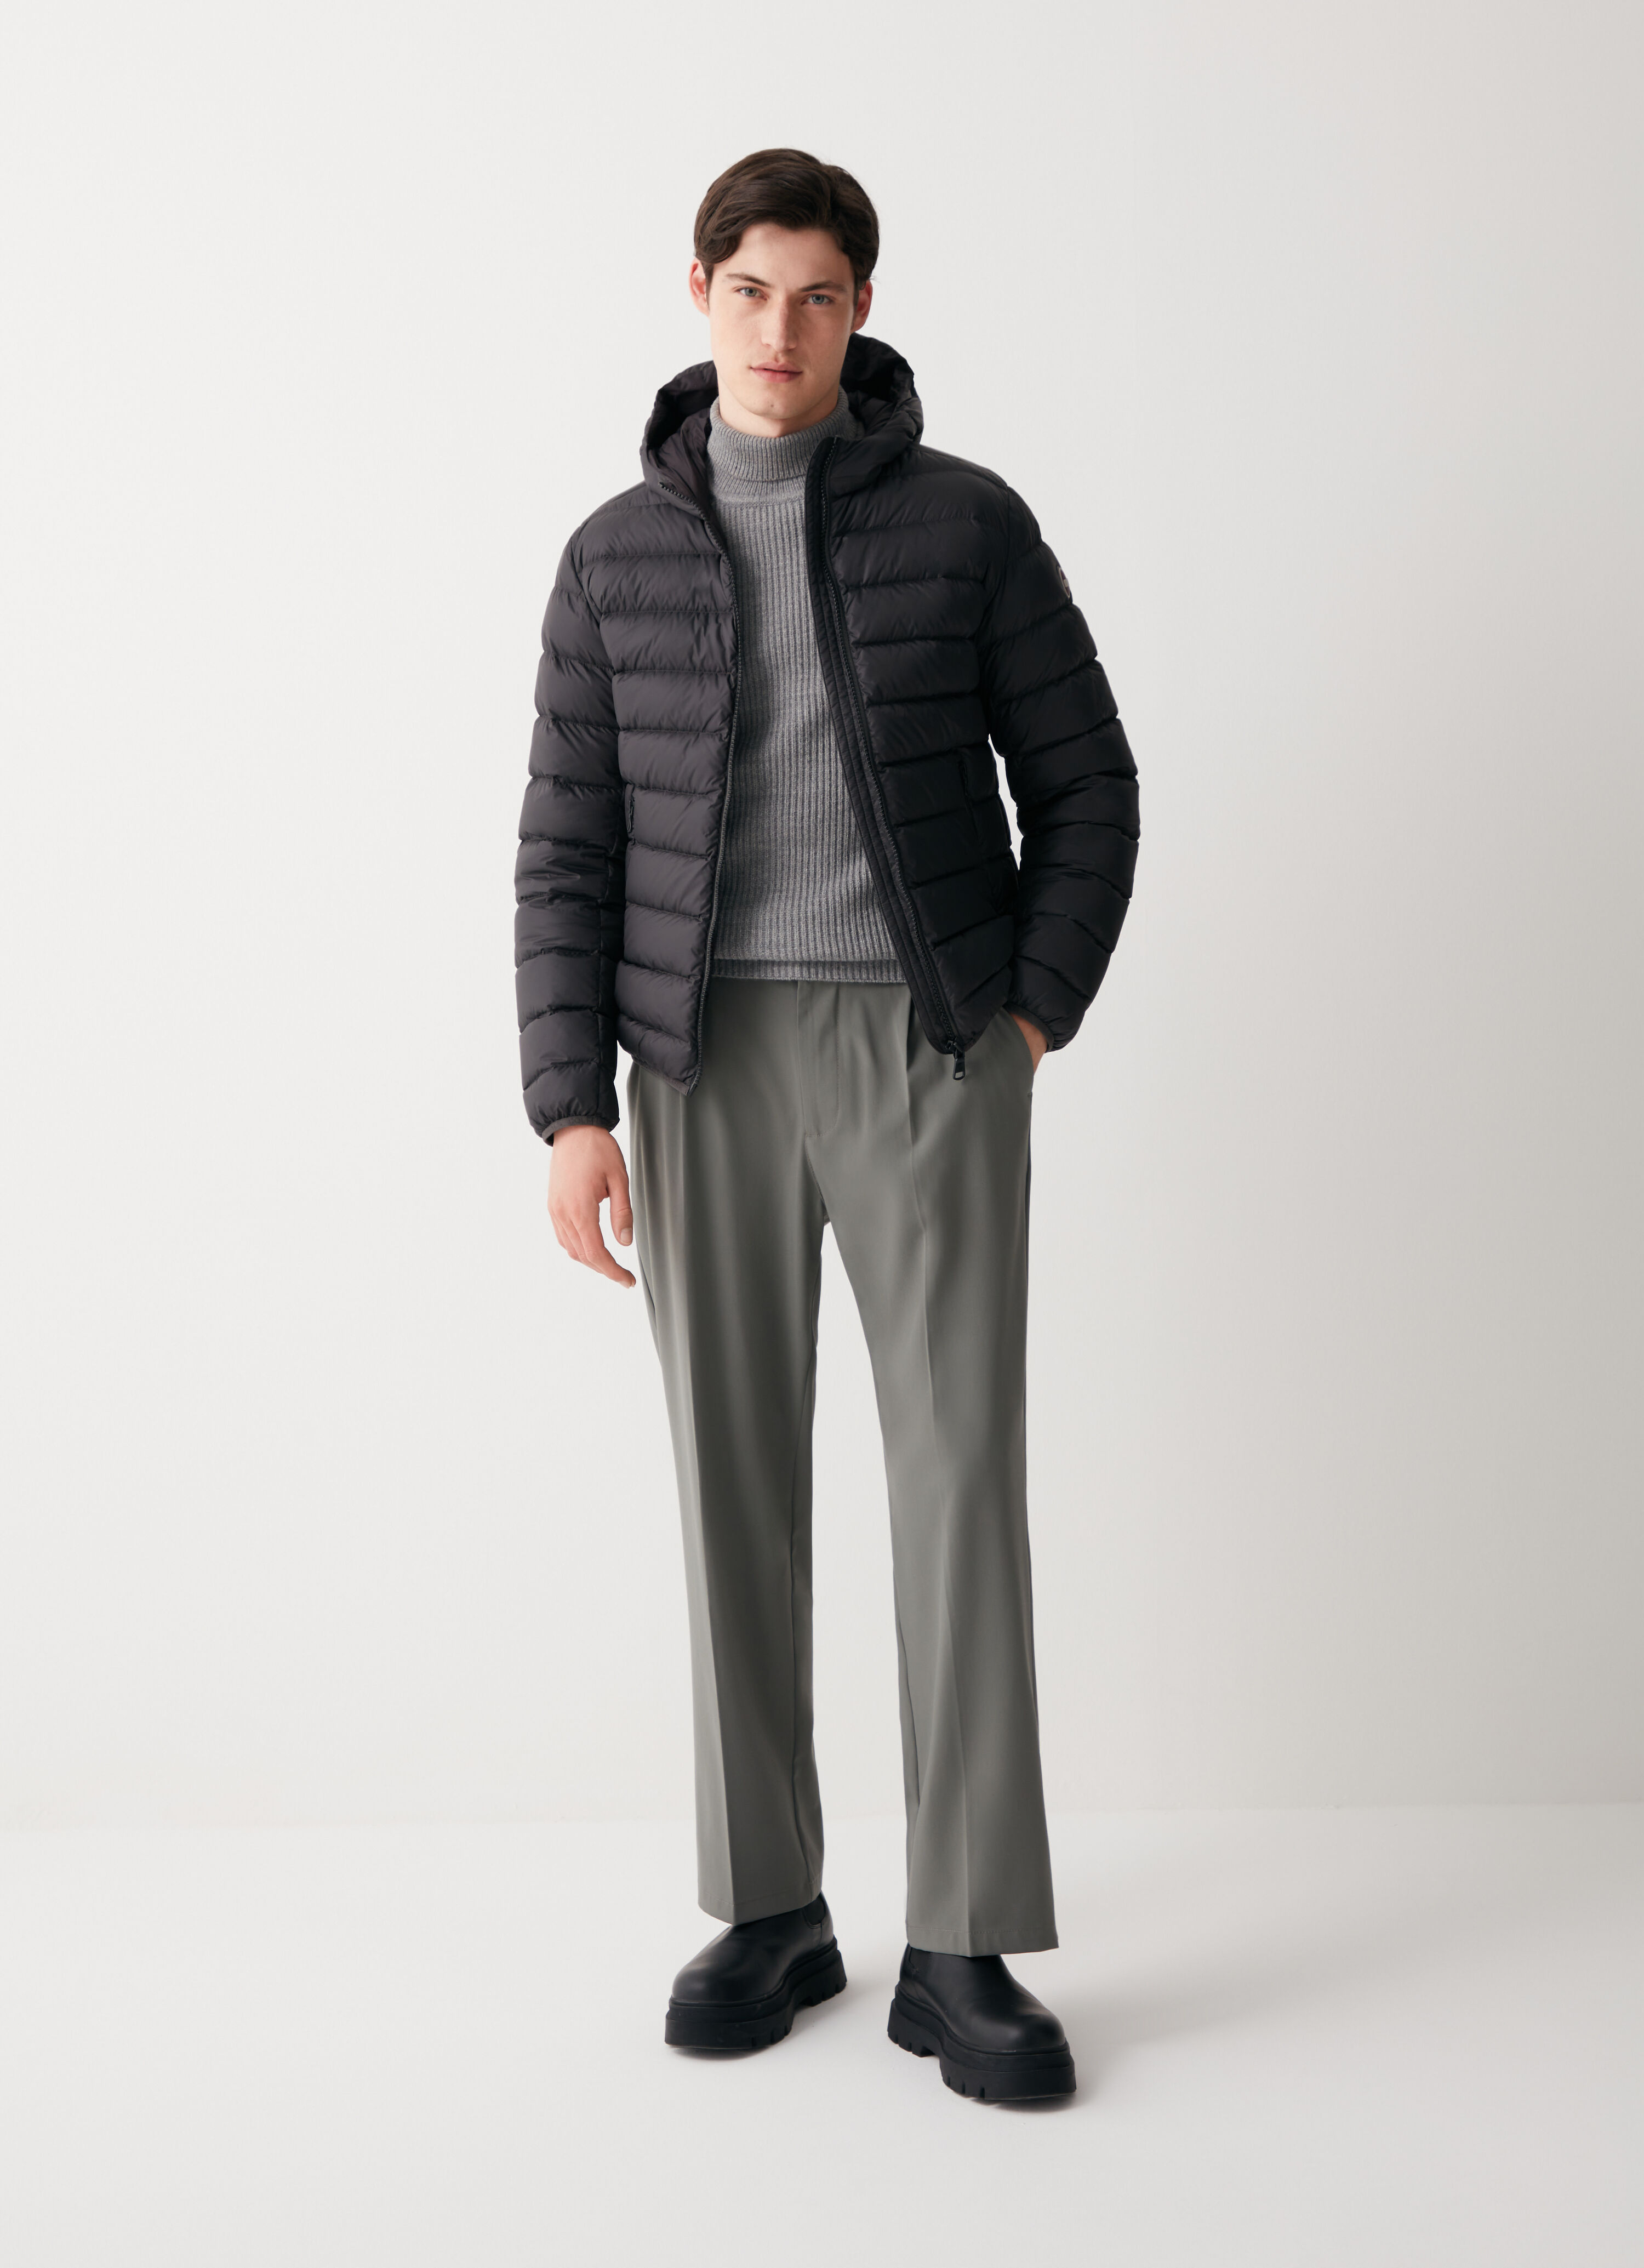 Husqvarna Winter Jacket (Mens) - Husqvarna Merchandise Range